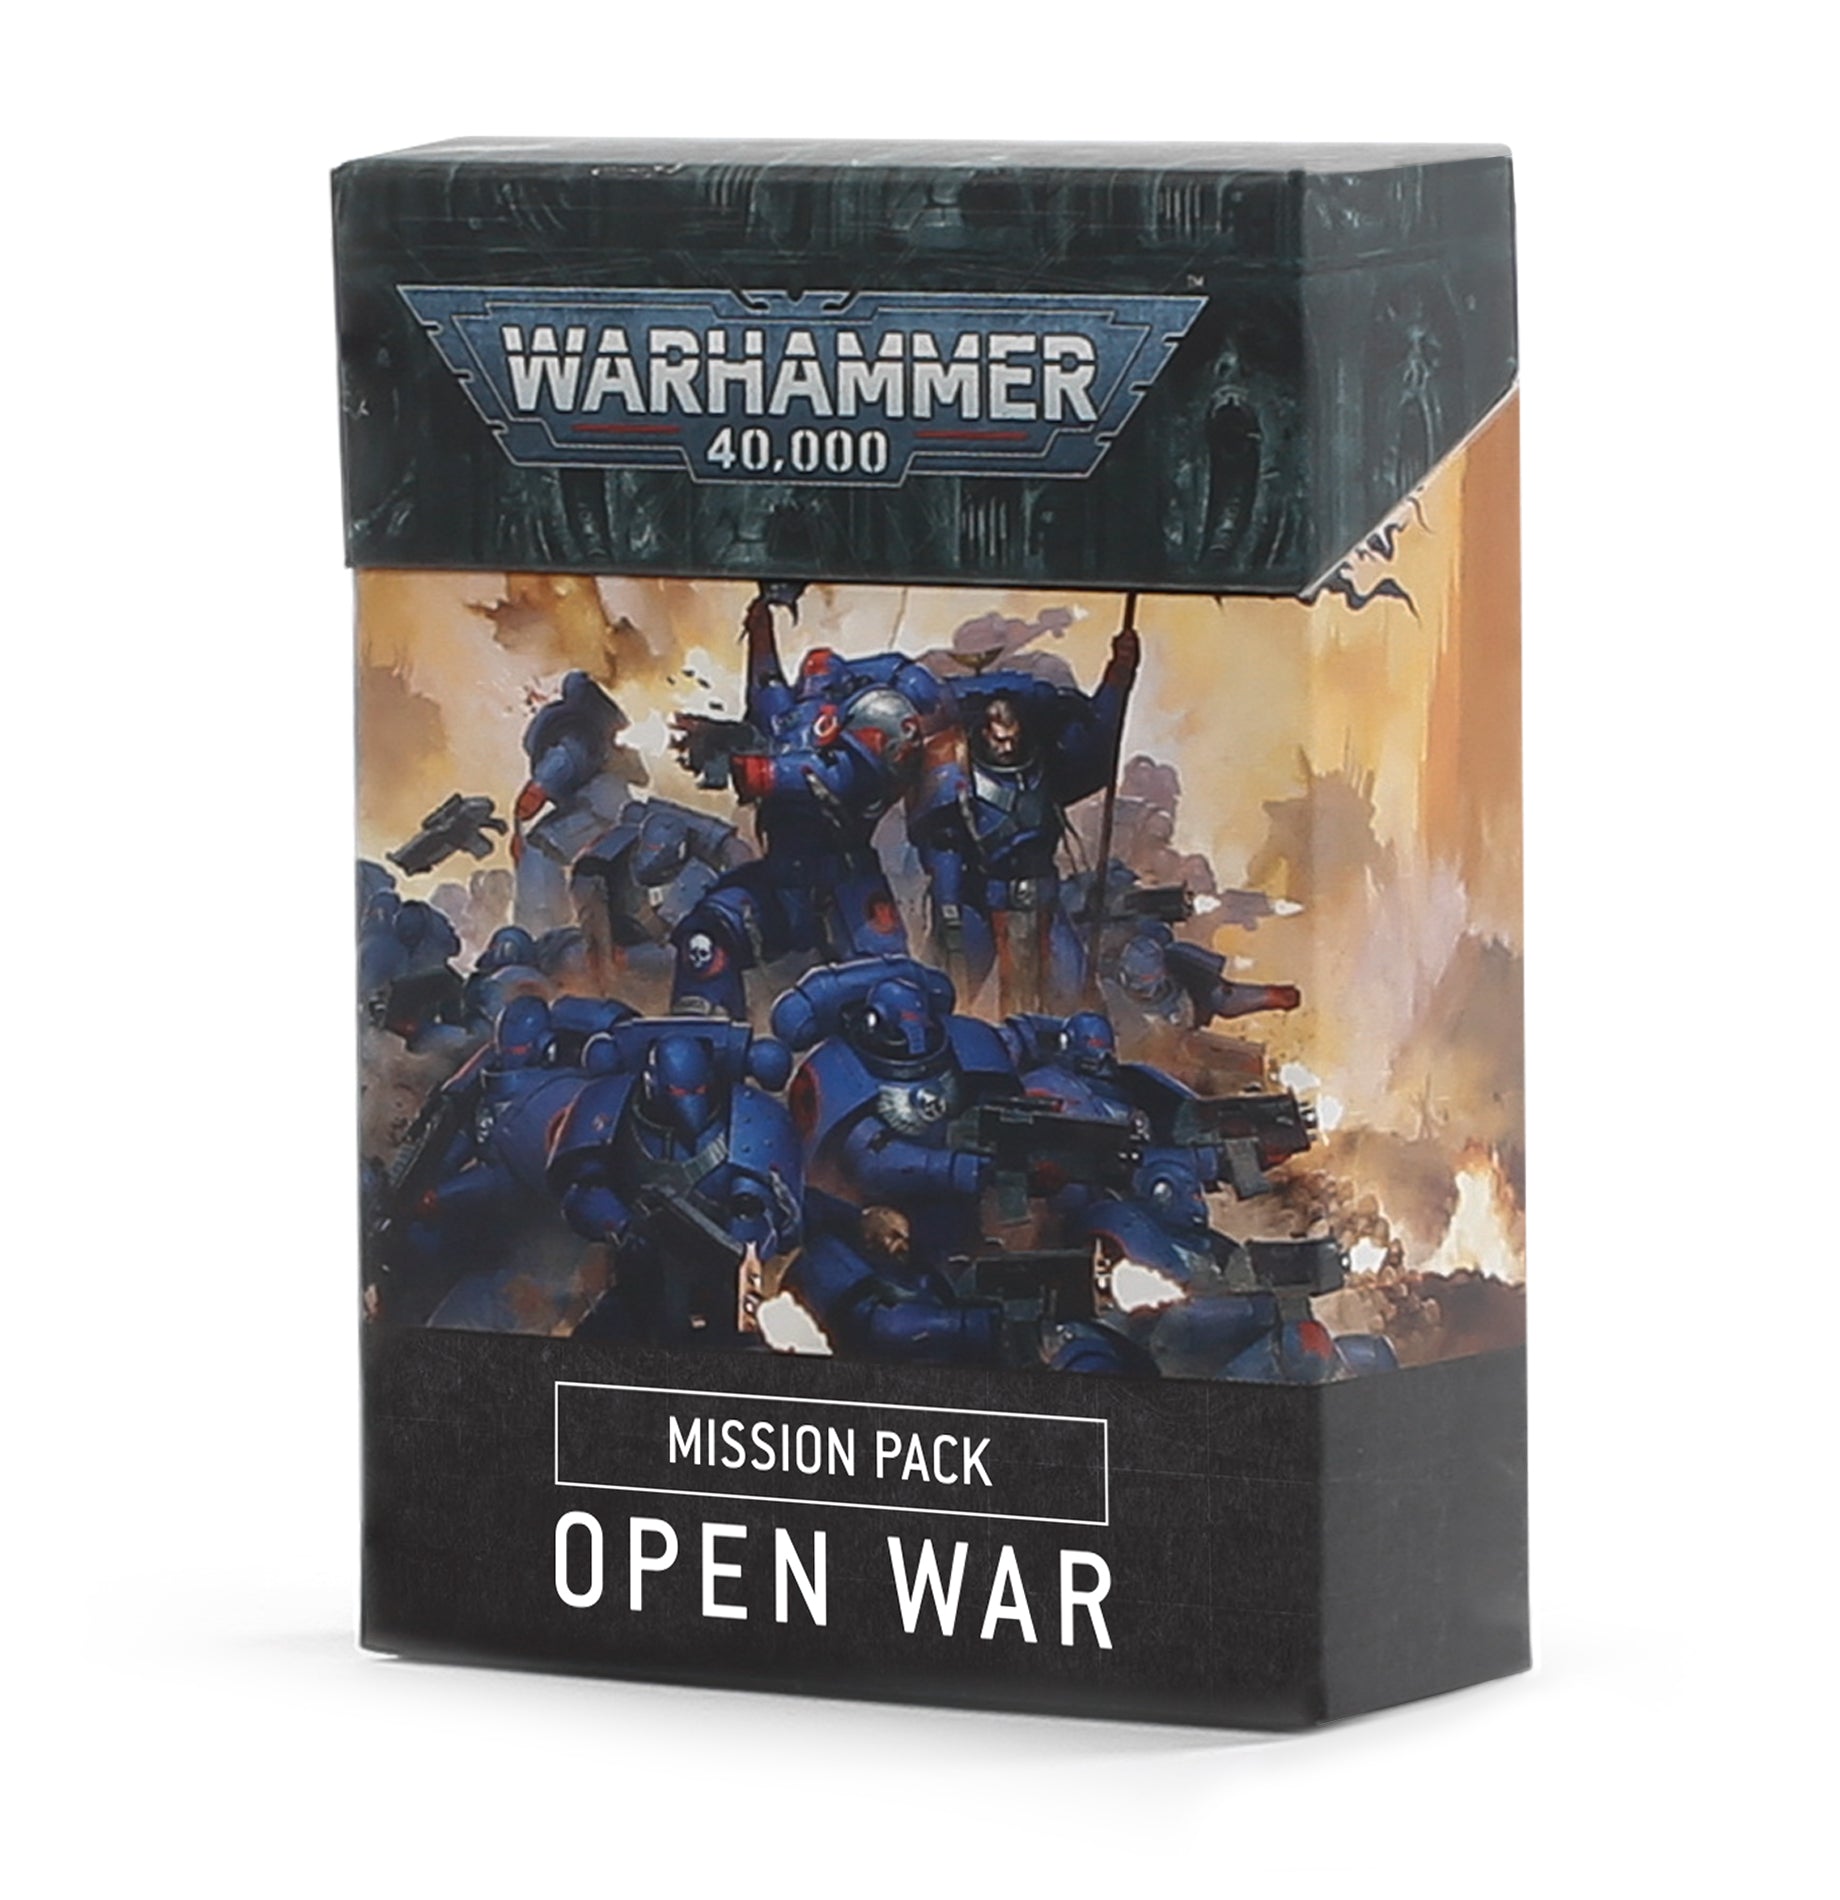 Warhammer 40,000 Open War Mission Pack | Gate City Games LLC